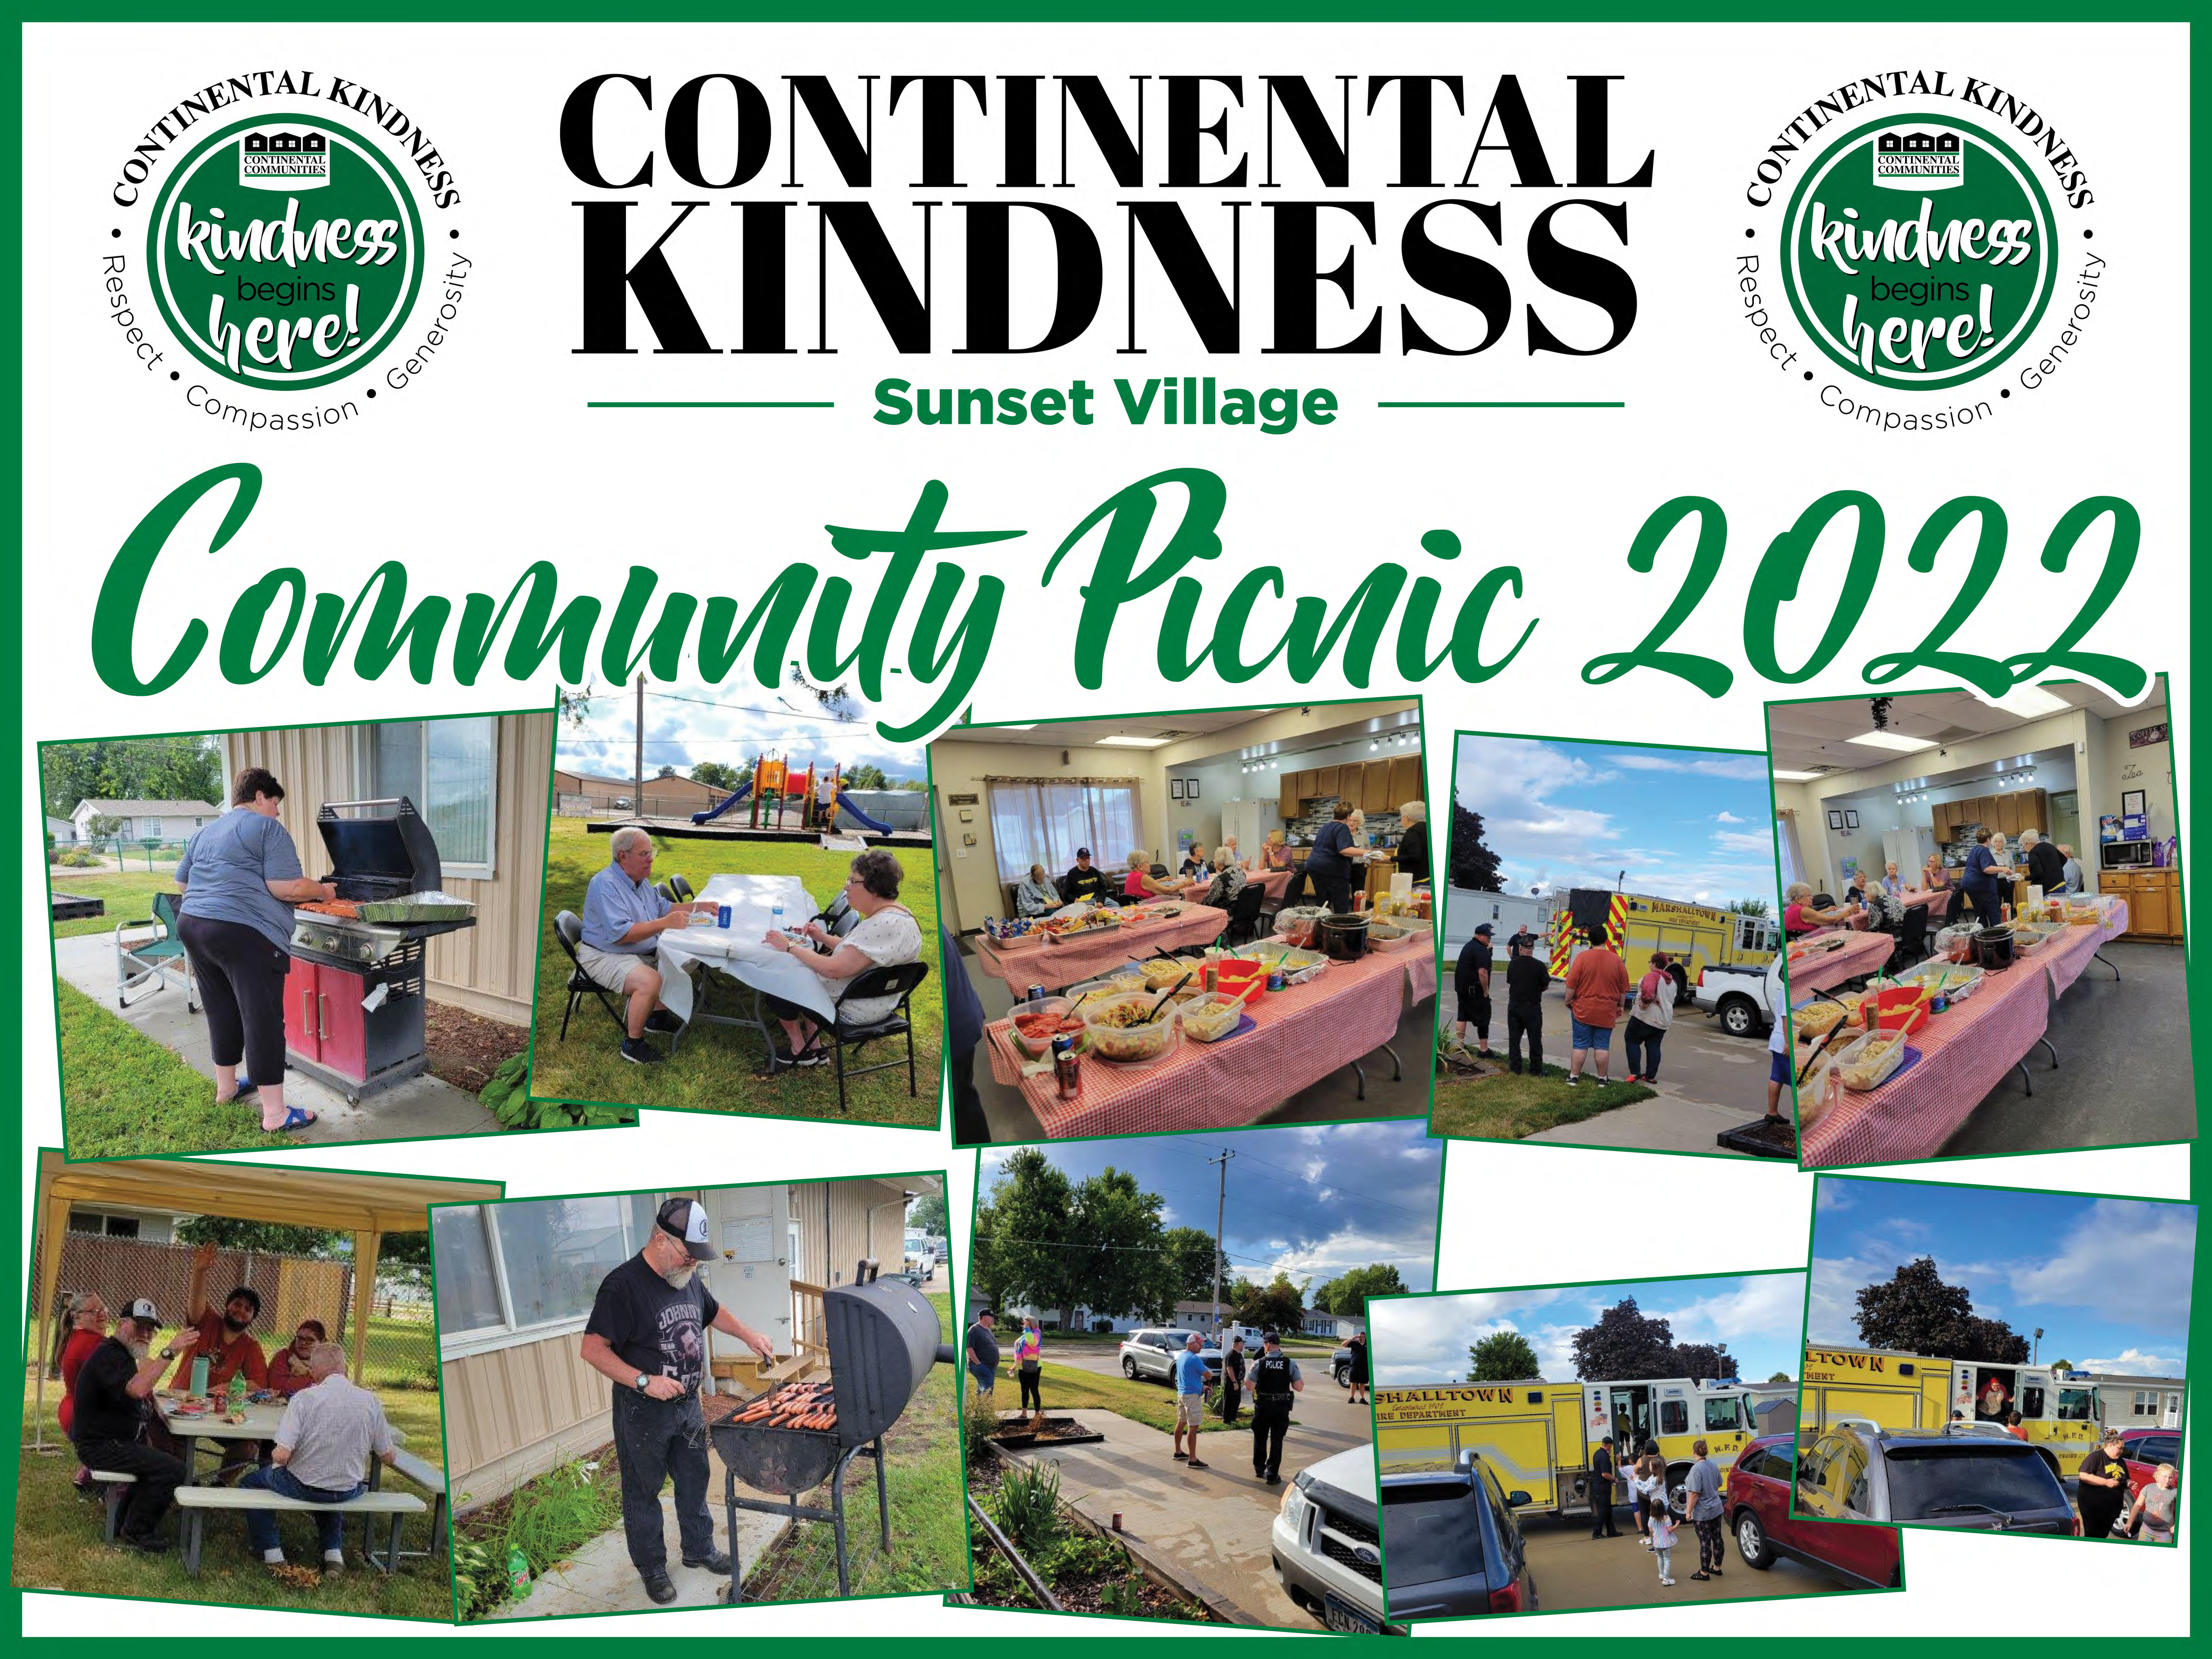 Continental Kindness Park Sunset Village Community Picnic 2022